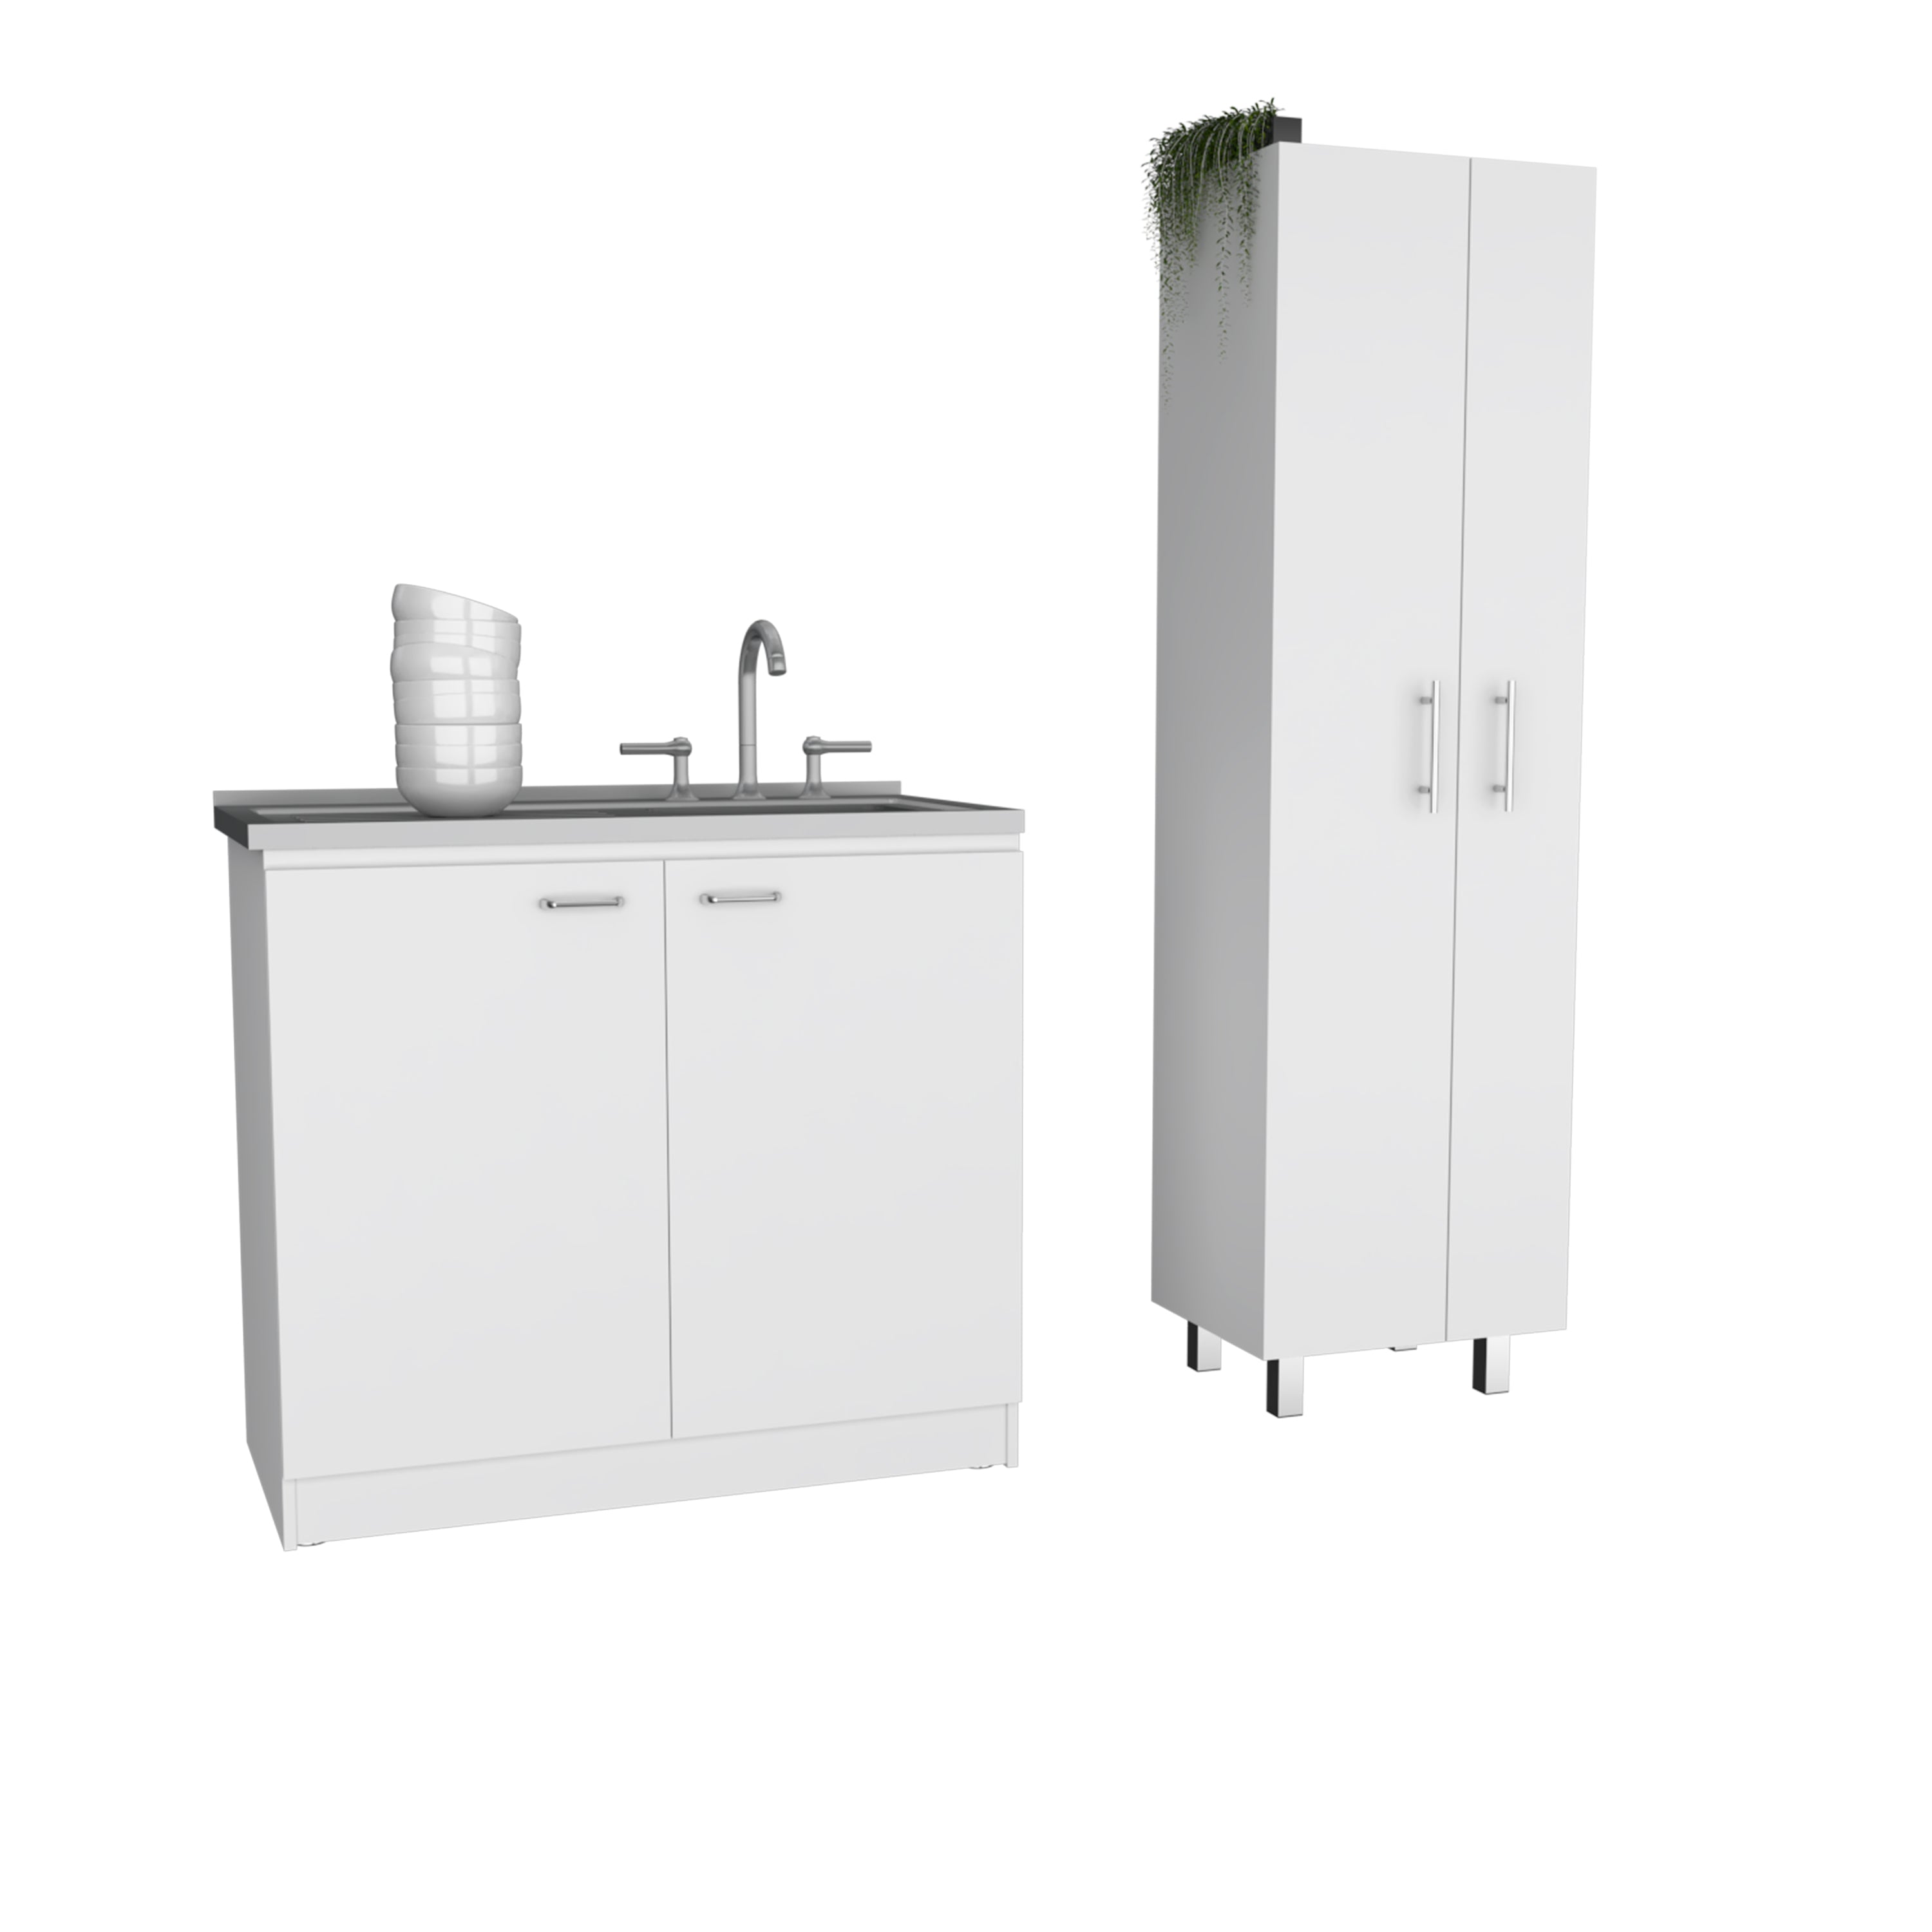 FM Furniture Safford 2 Piece Kitchen Set, Utility Sink Cabinet + Pantry Cabinet, White